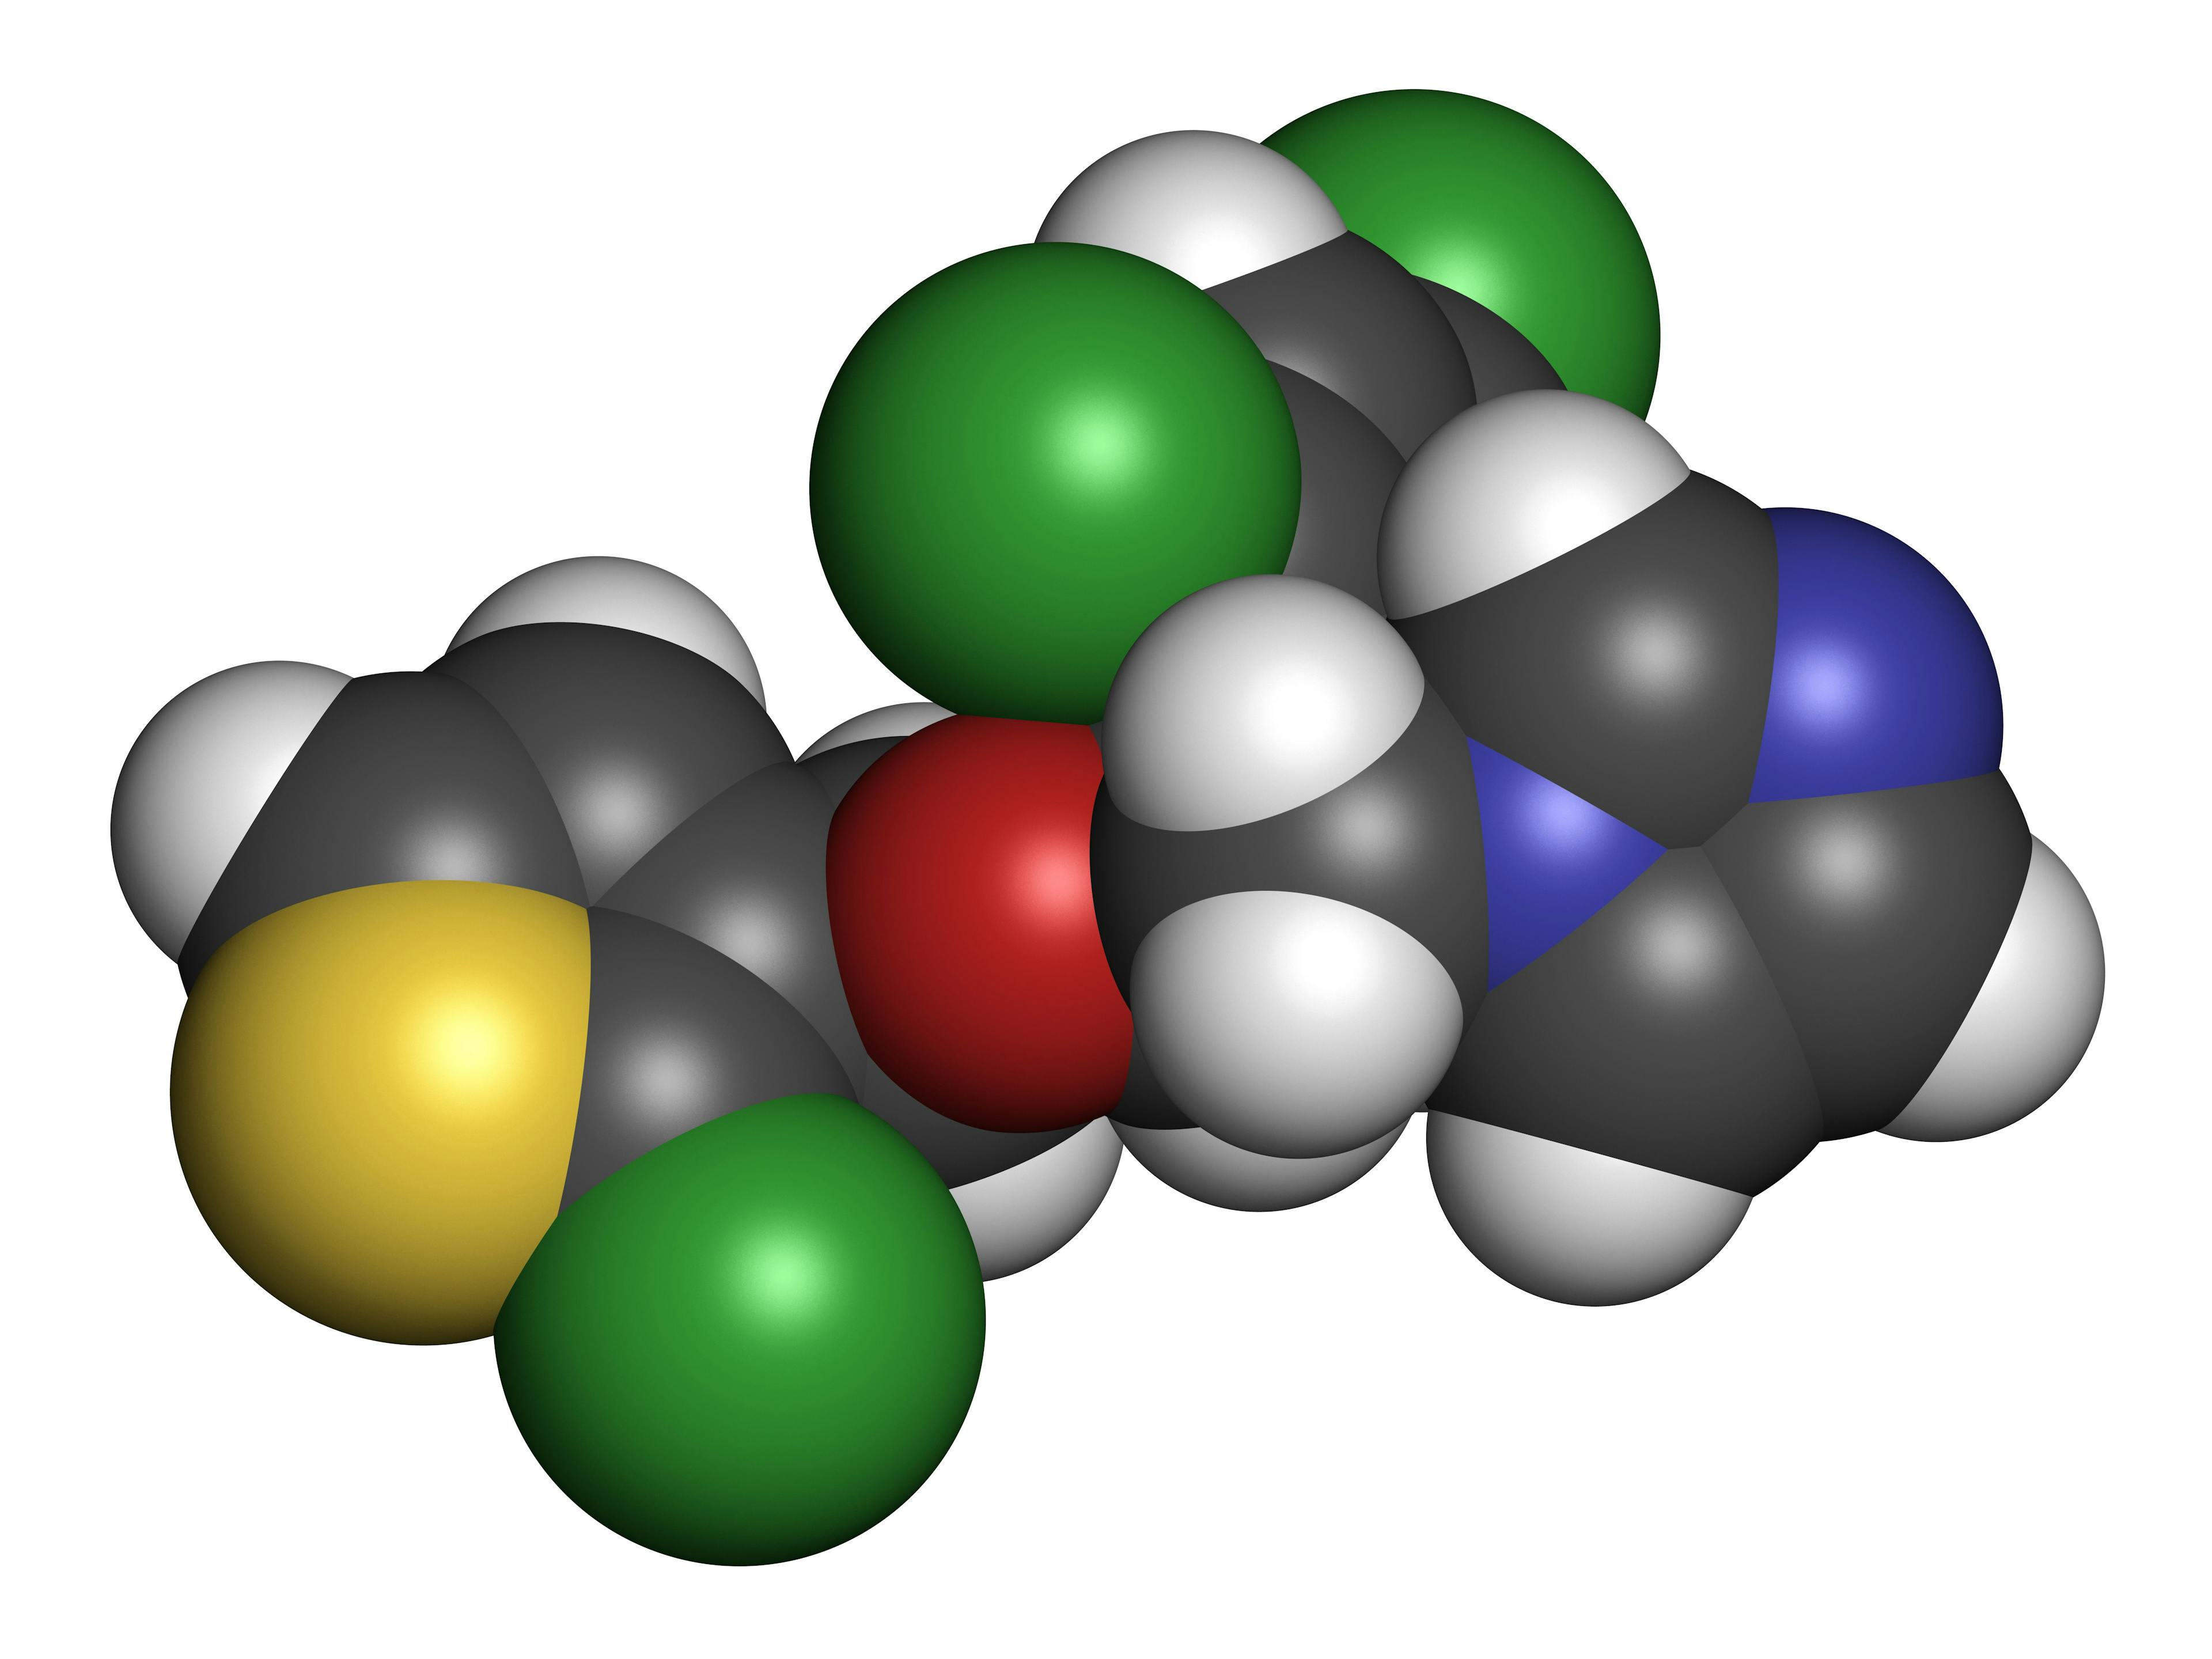 Tioconazole antifungal drug molecule. 3D rendering. | Image Credit: © molekuul.be - stock.adobe.com